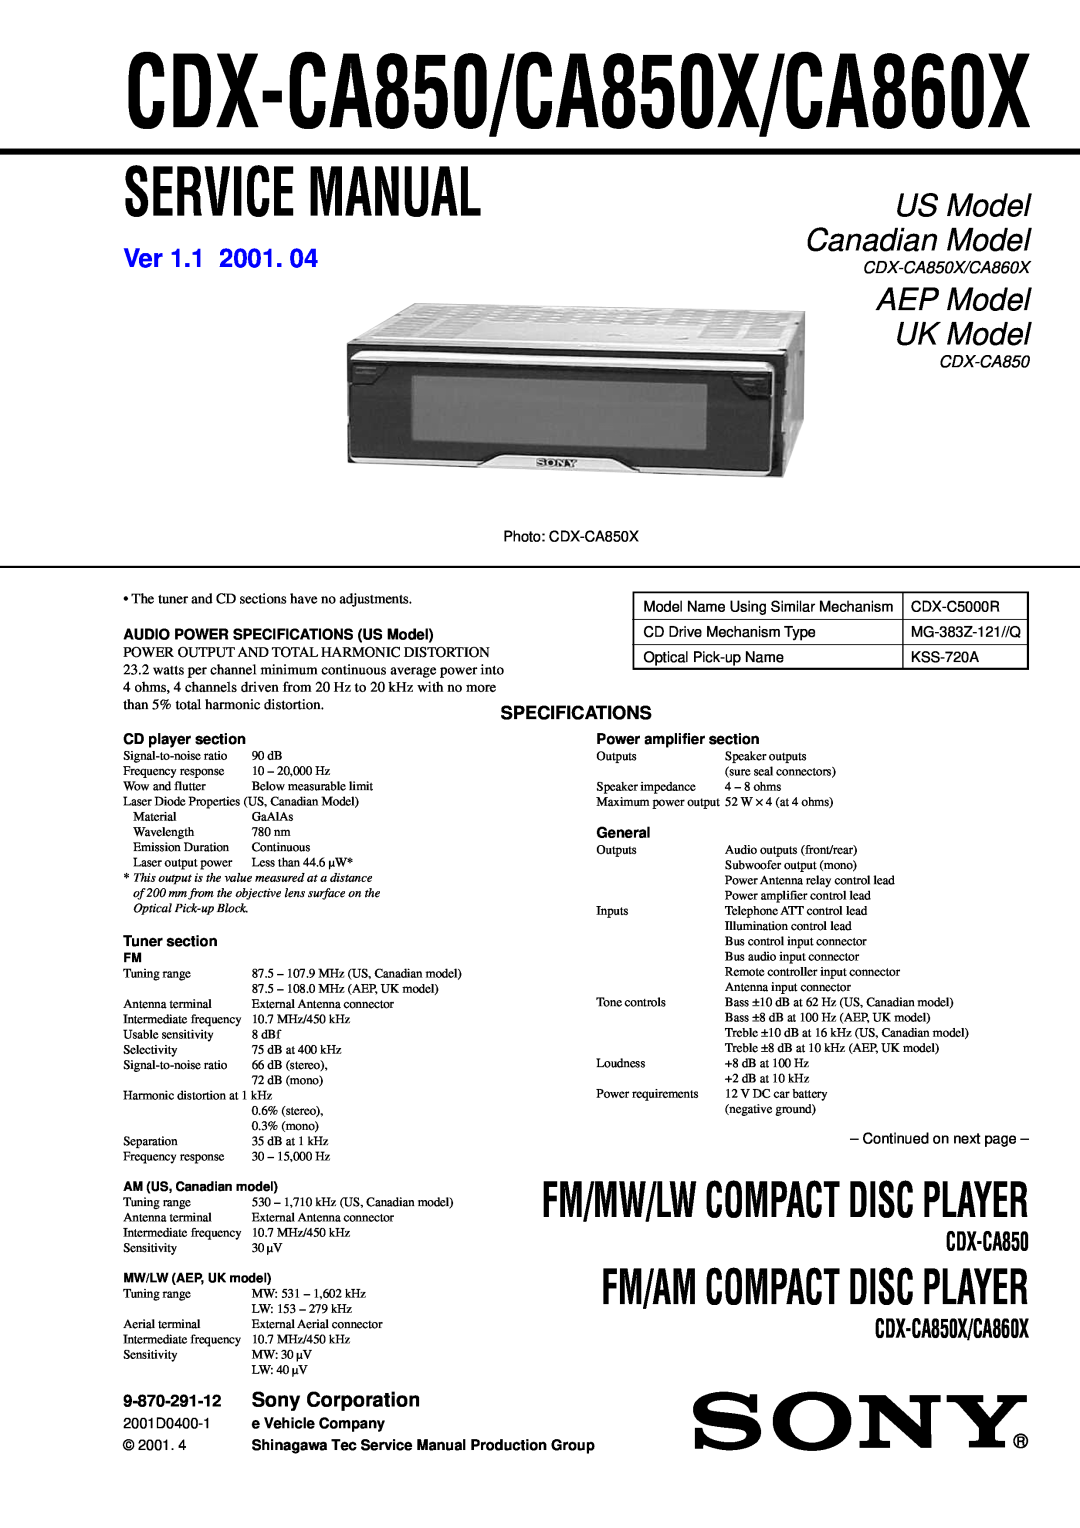 Sony Ericsson service manual Specifications, CDX-CA850/CA850X/CA860X, US Model, AEP Model, UK Model, Canadian Model 